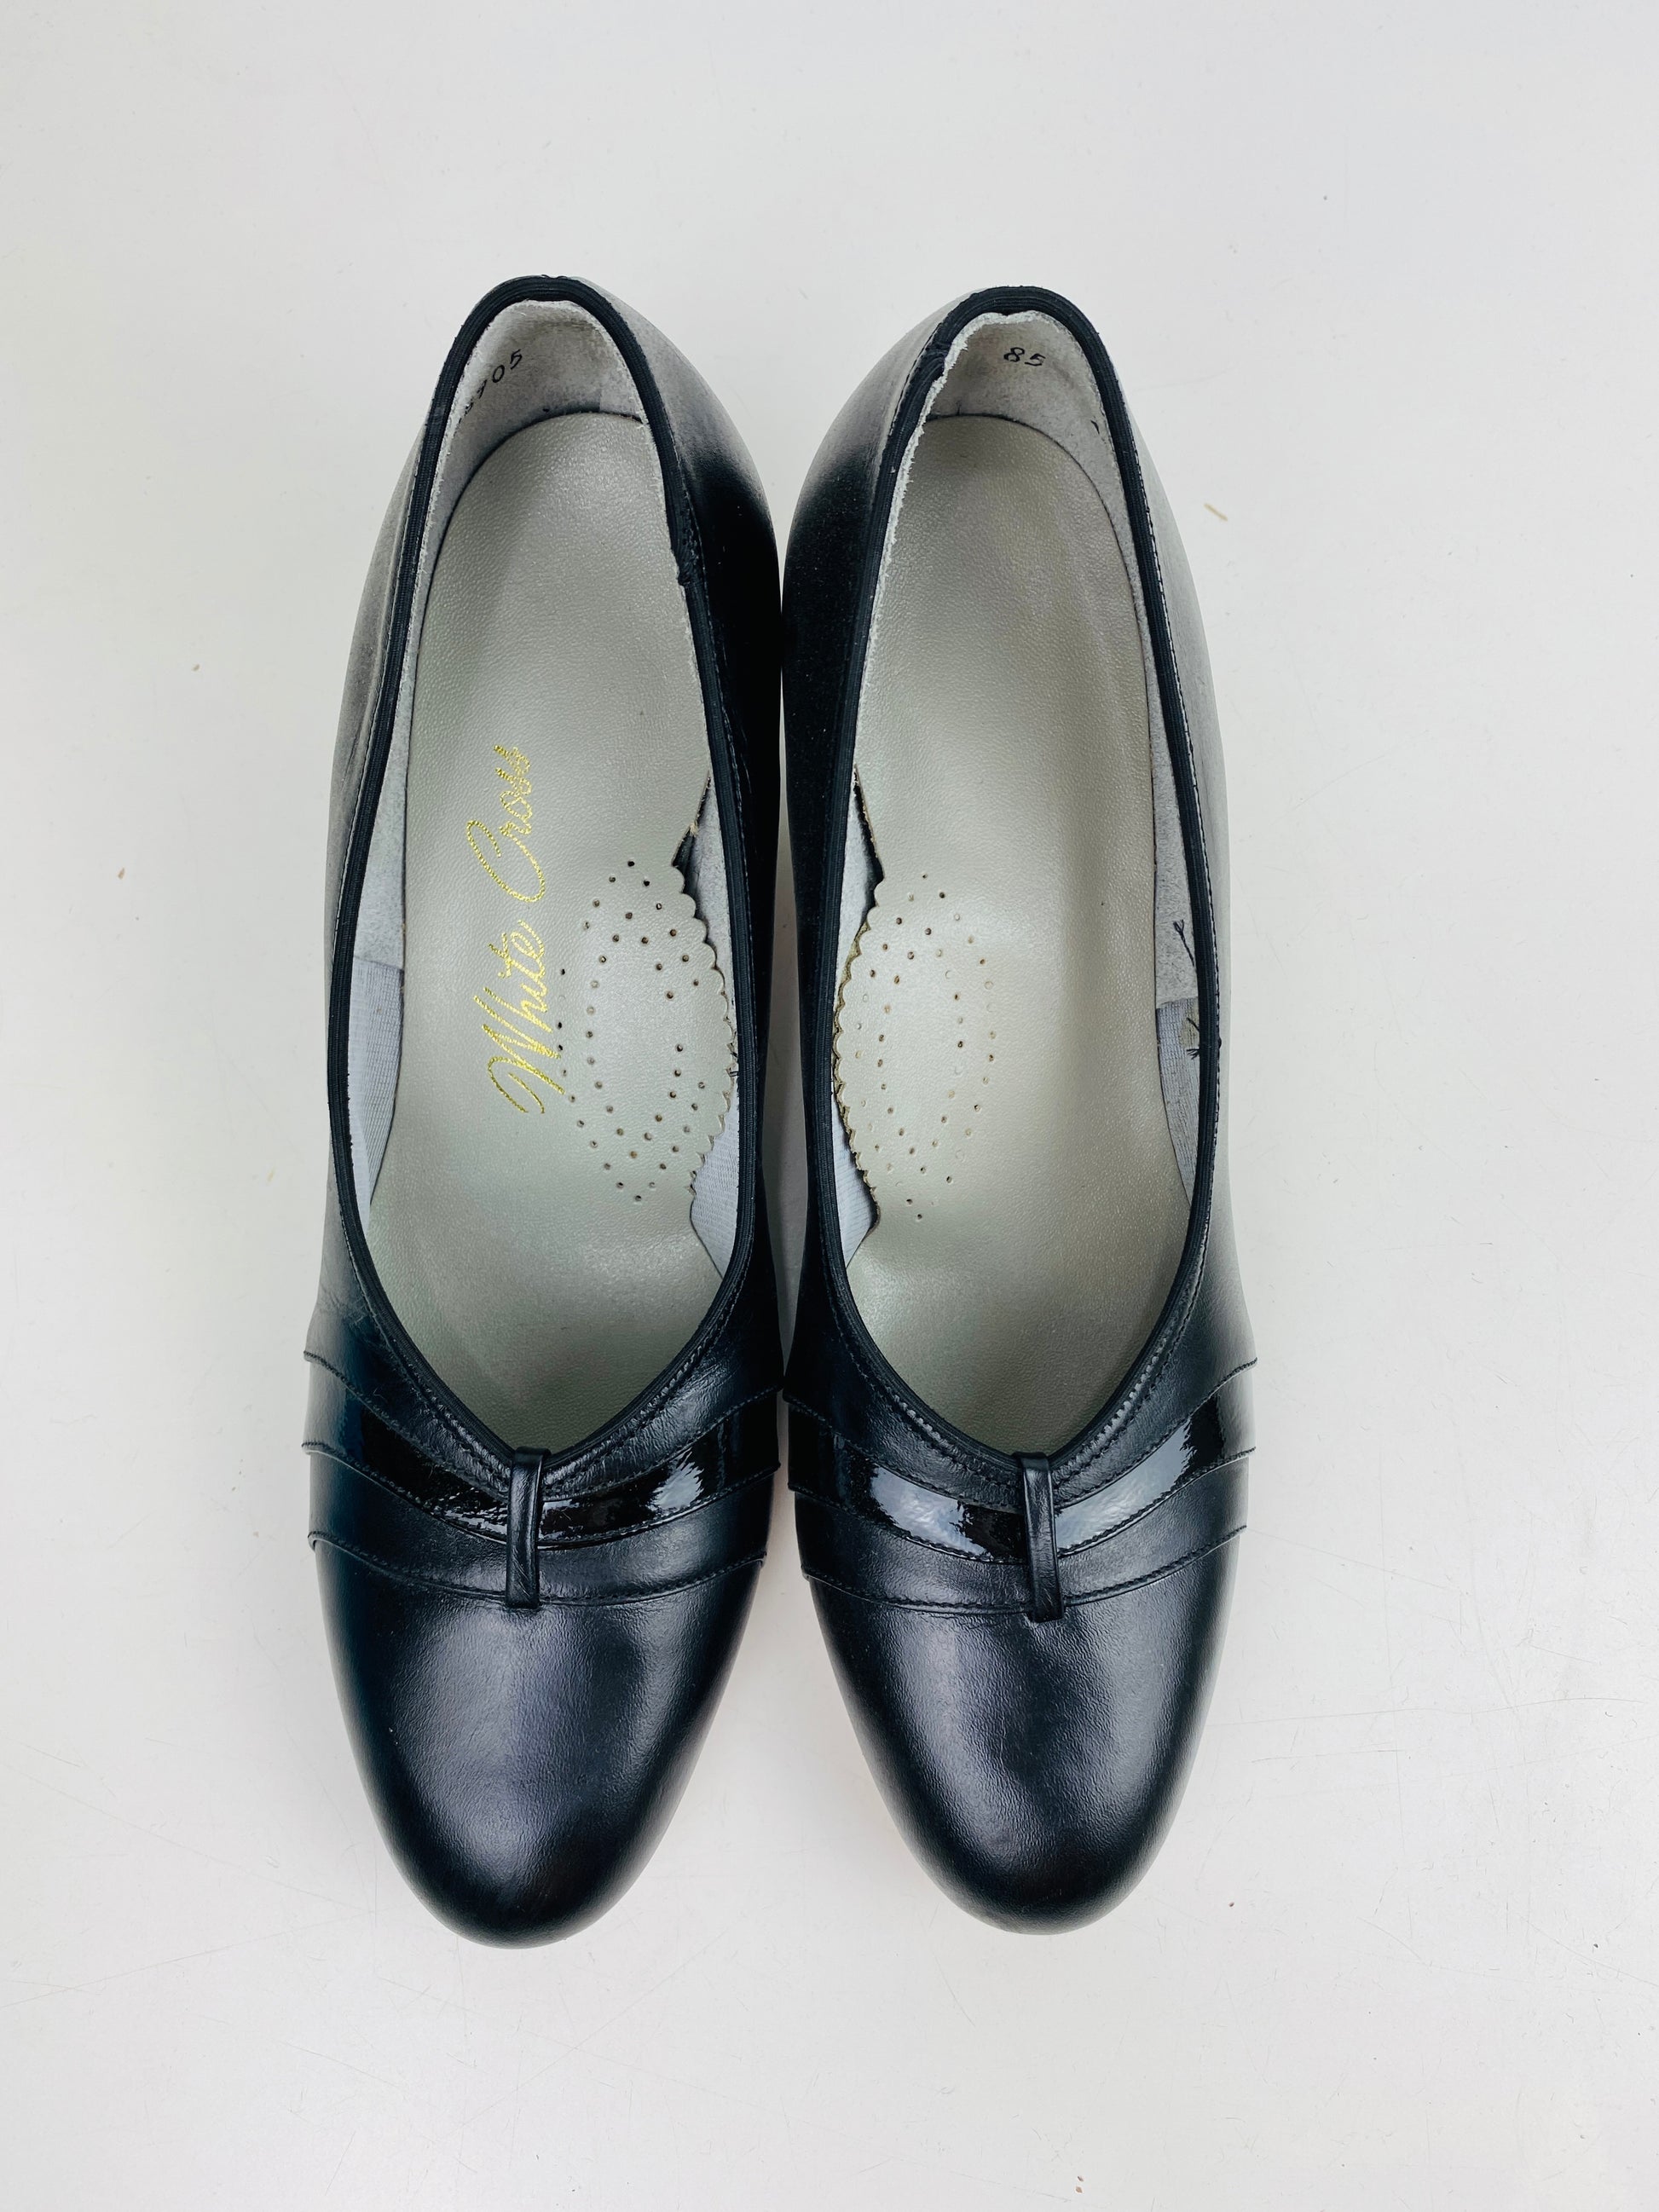 Vintage Deadstock Shoes, Women's 1980s Black Leather Mid-Heel Pump's, NOS